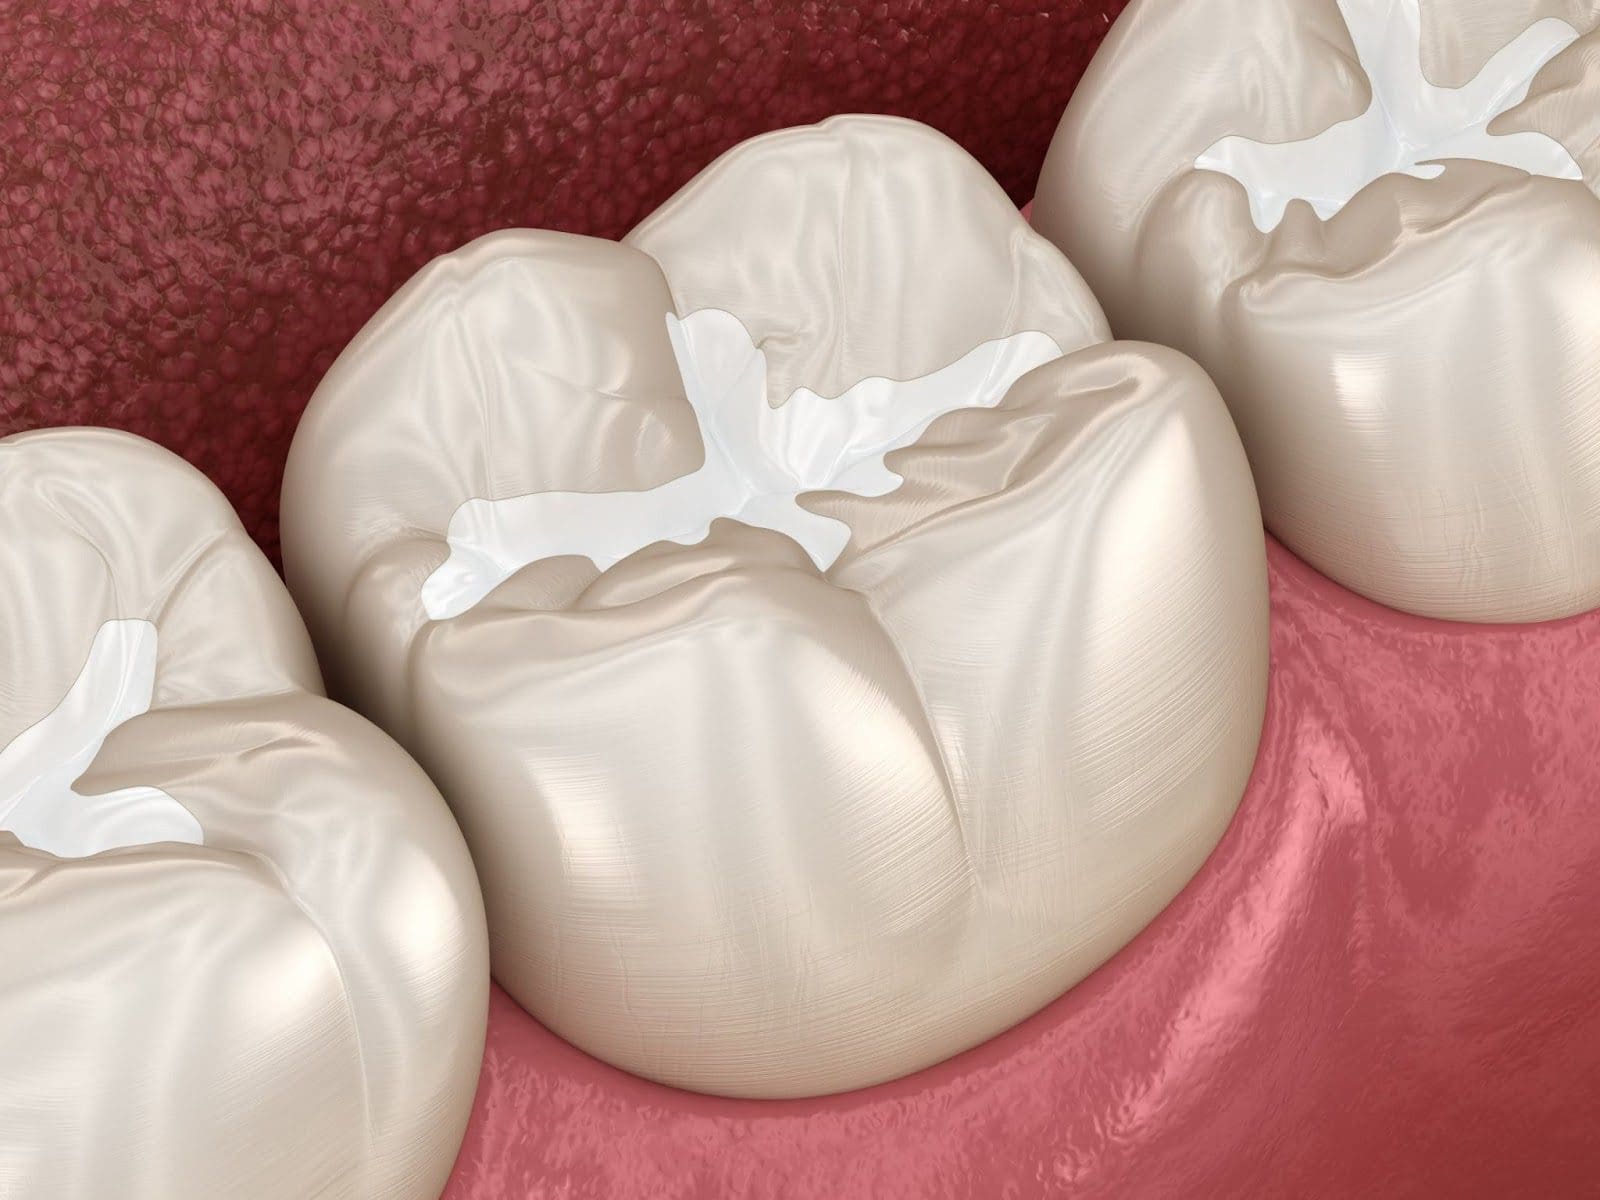 Should my child get dental sealants?